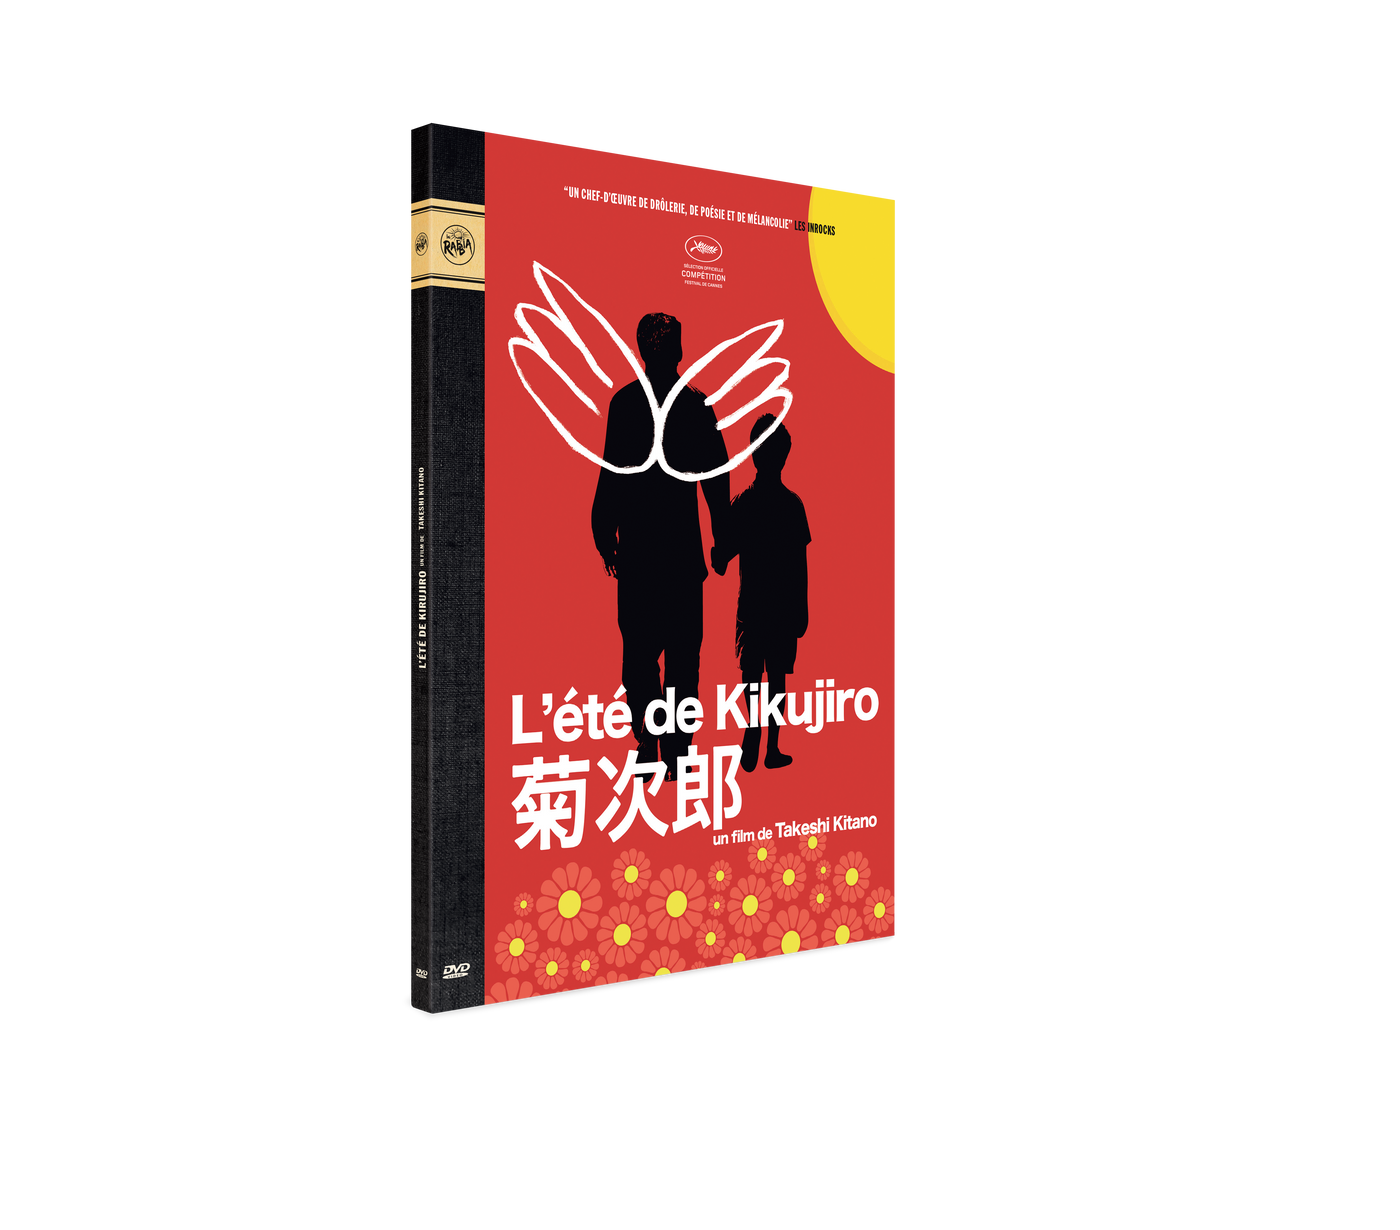 DVD Digipack "L'Ete de Kikujiro"